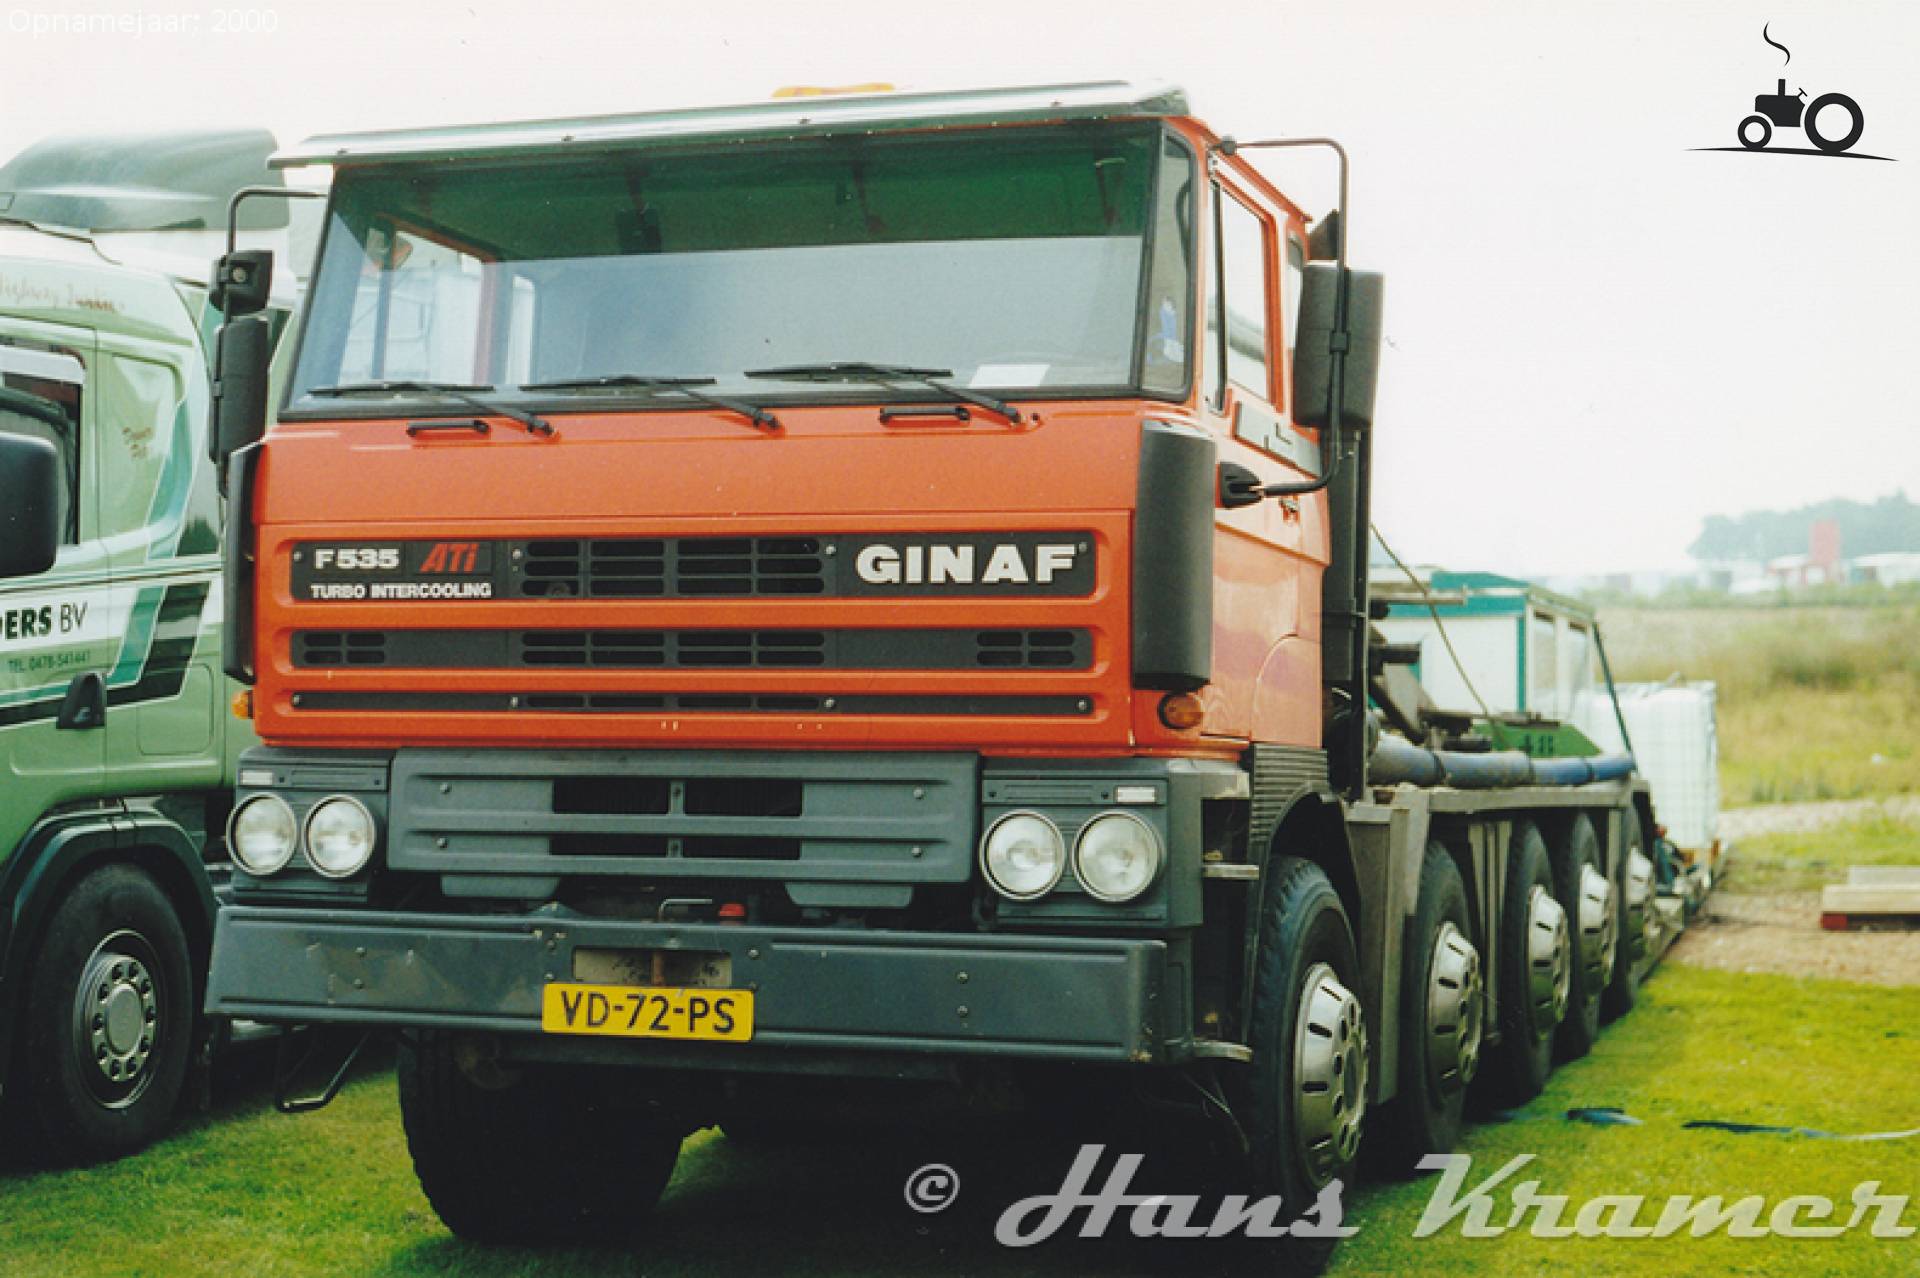 Ginaf F535